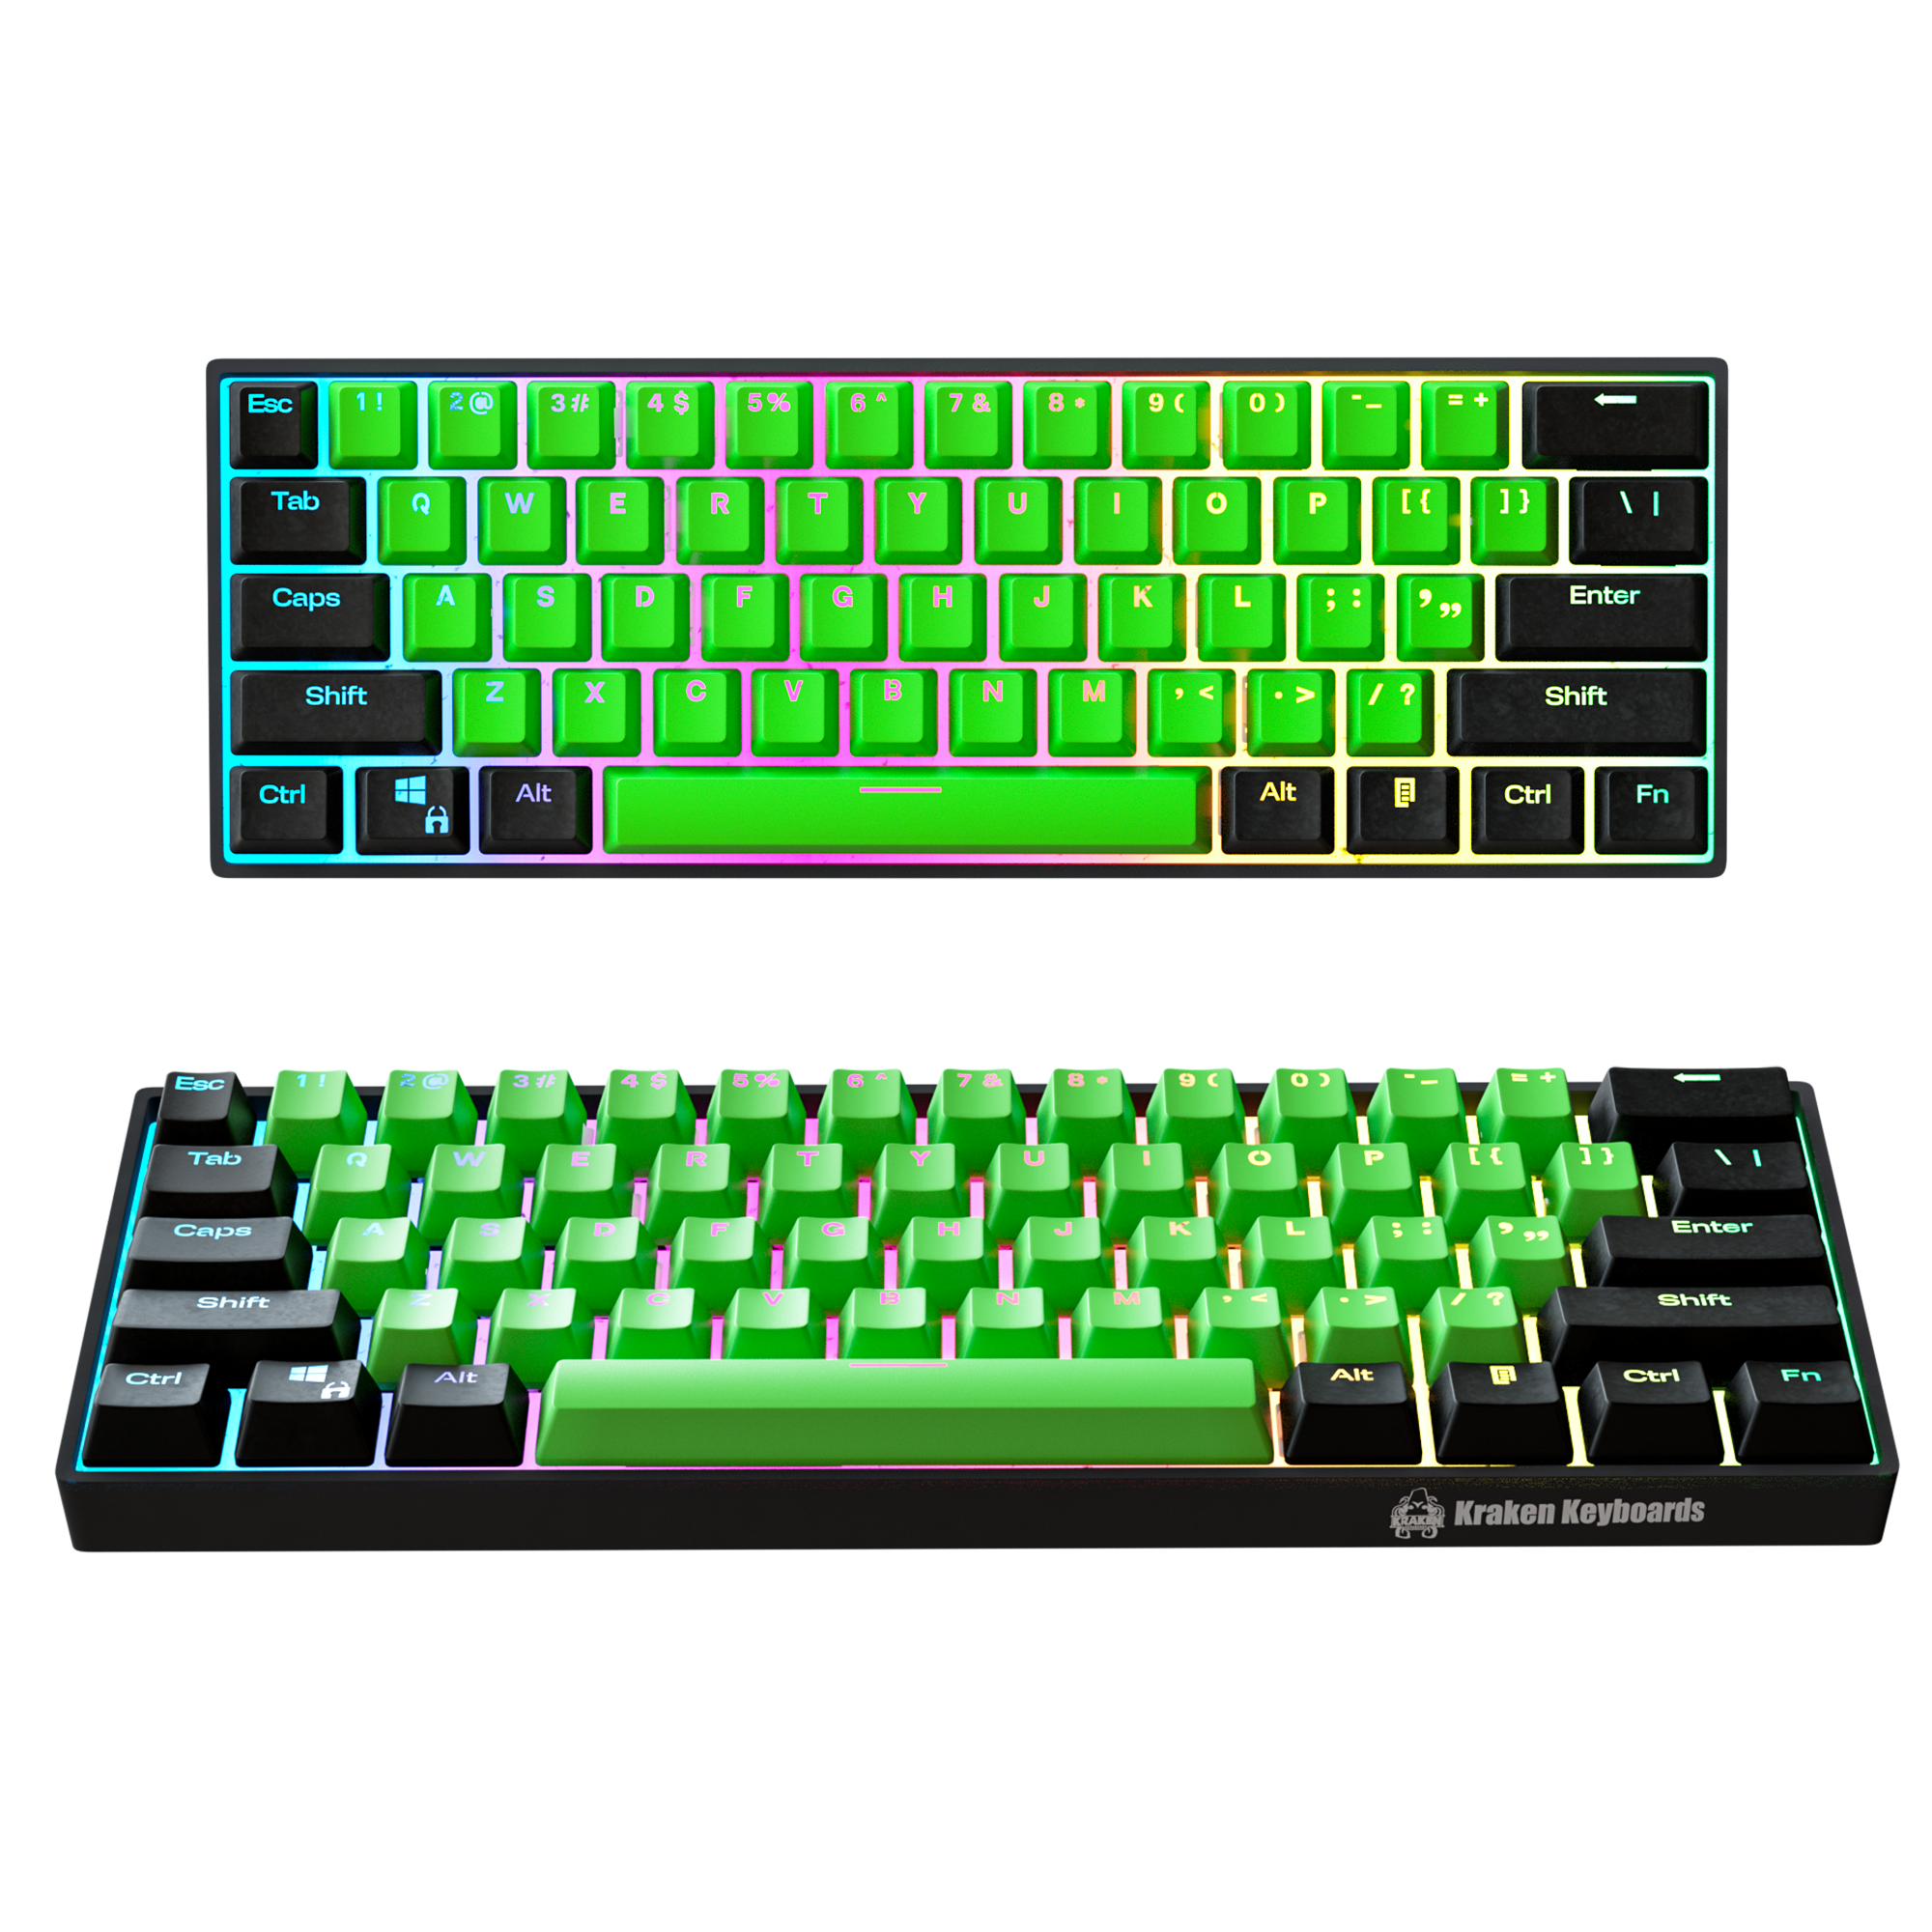 WOLF Edition, Kraken Pro 60% Mechanical Keyboard